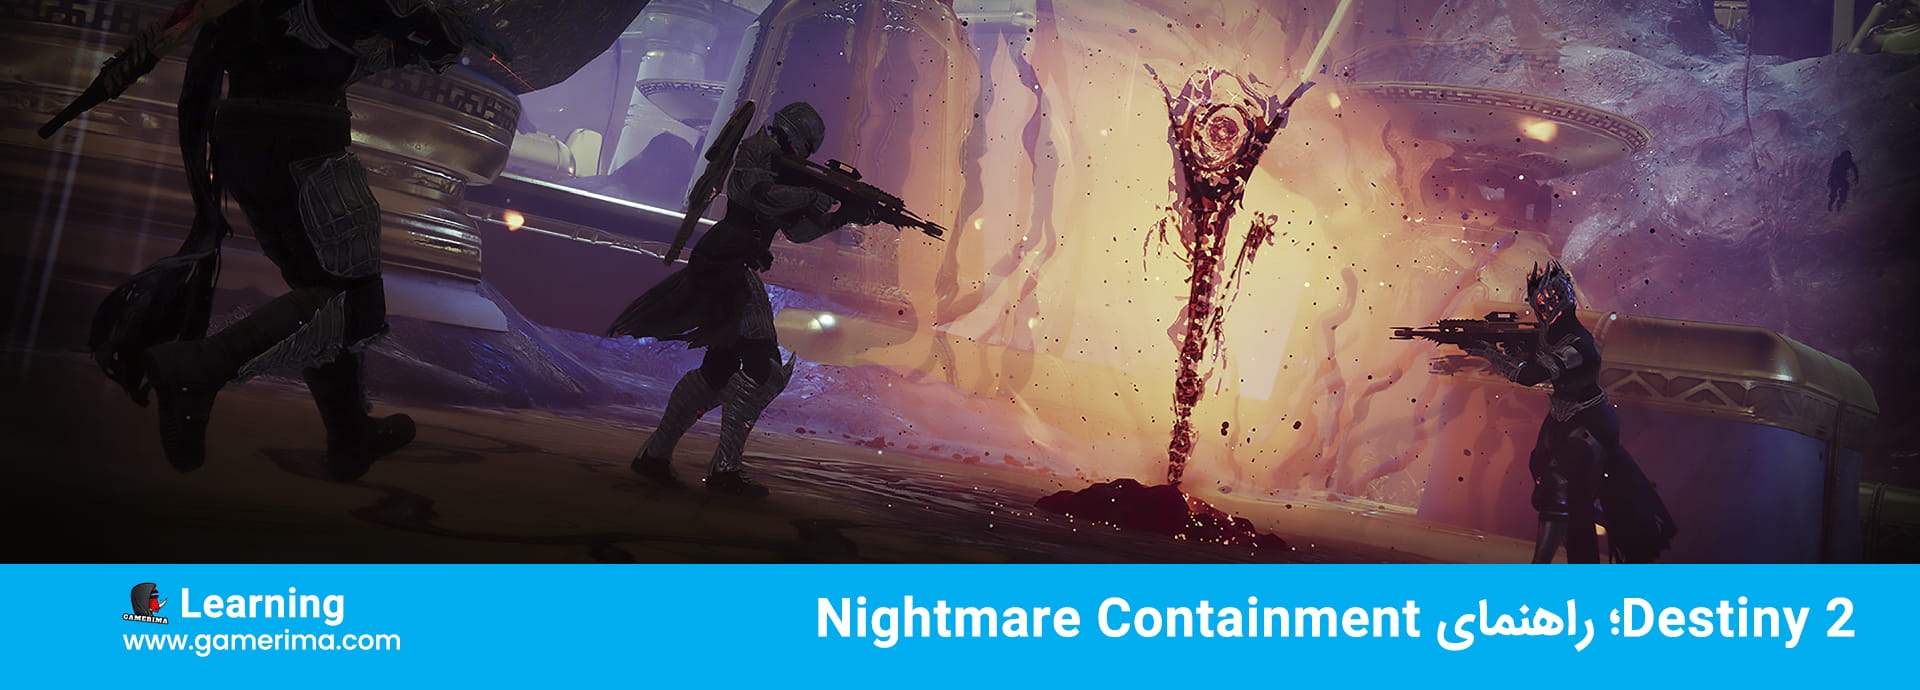 Nightmare Containment In Destiny 2